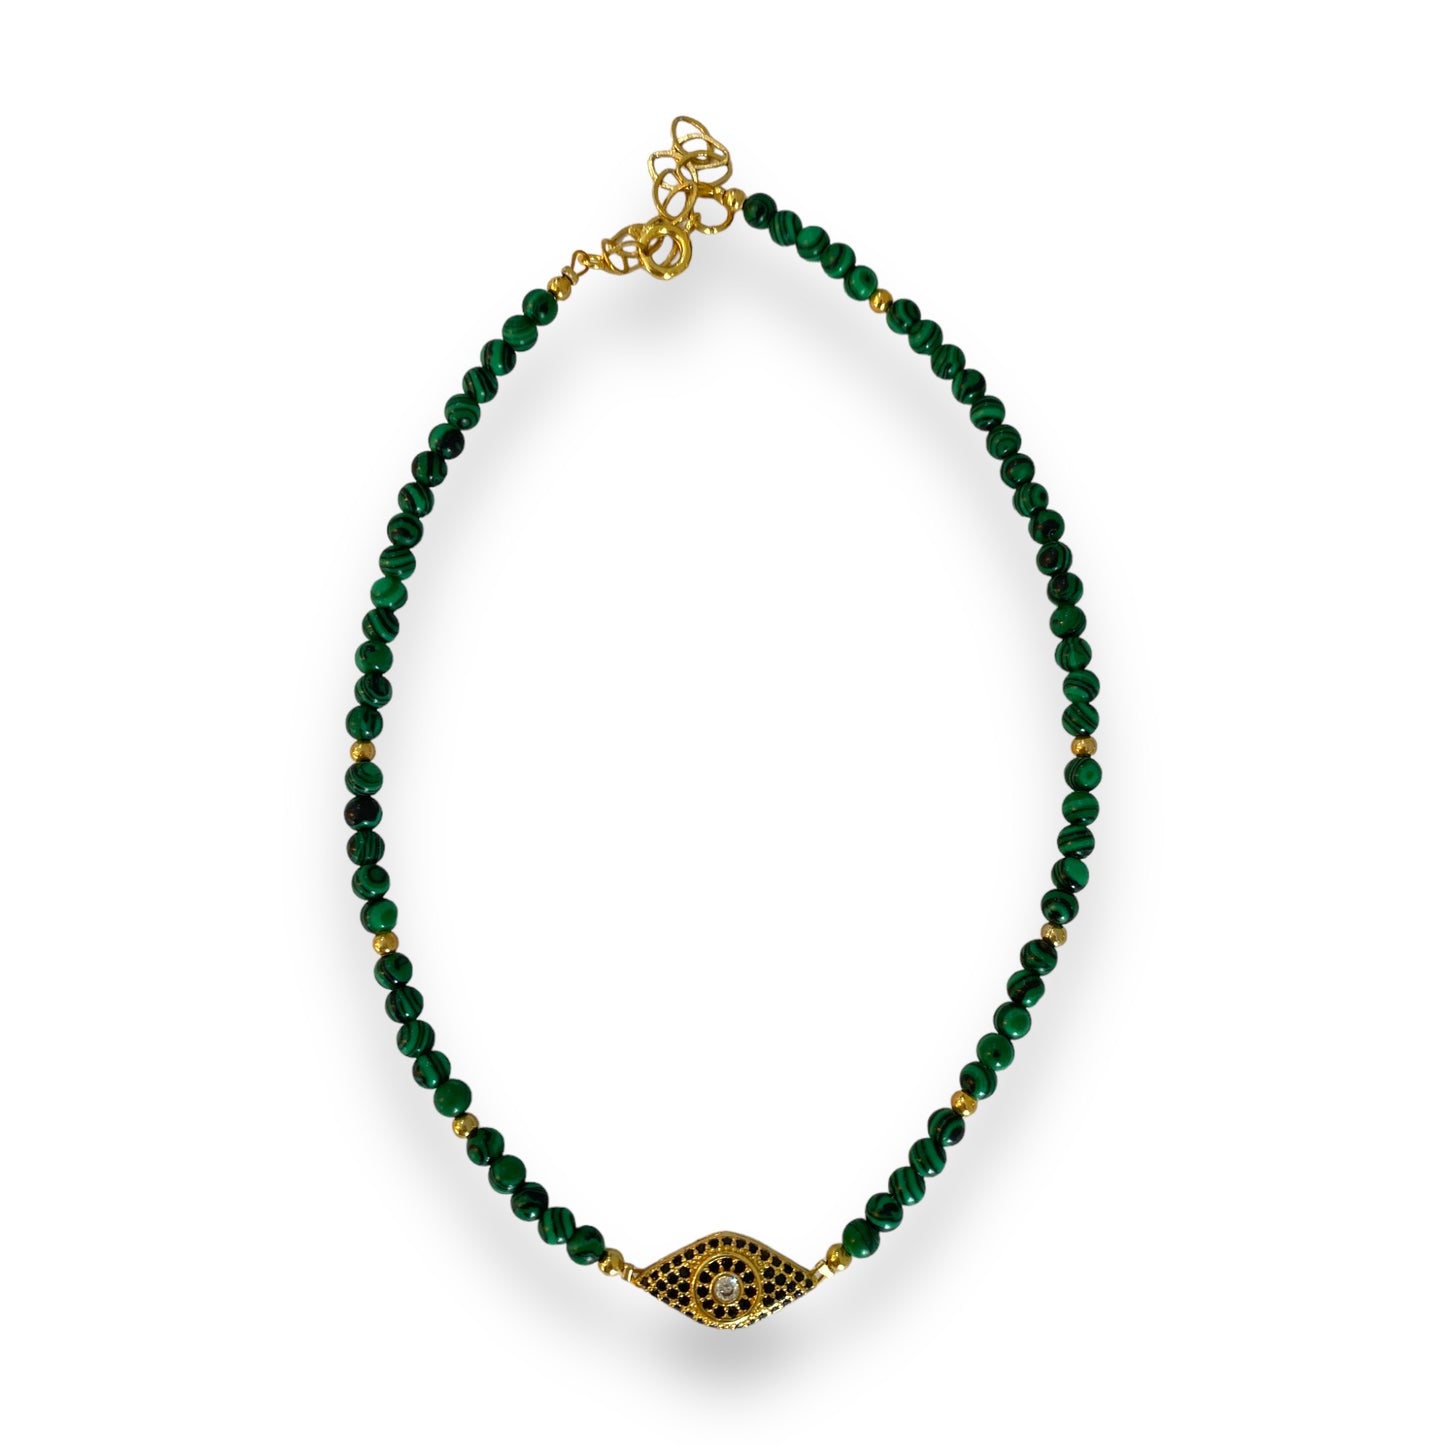 Tripoli necklace